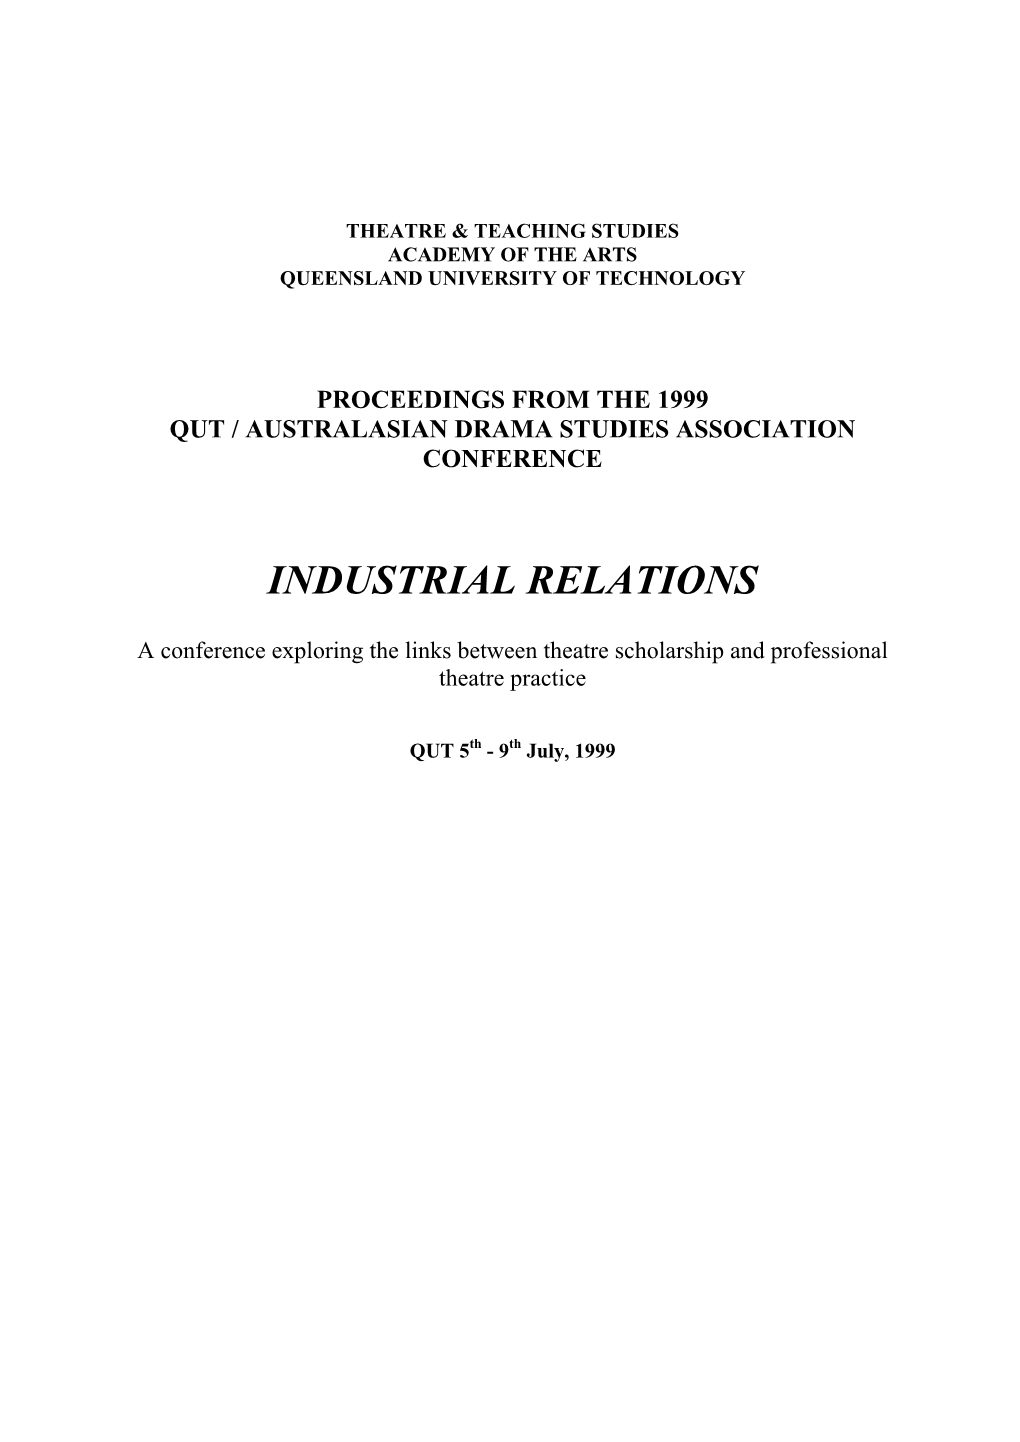 Industrial Relations